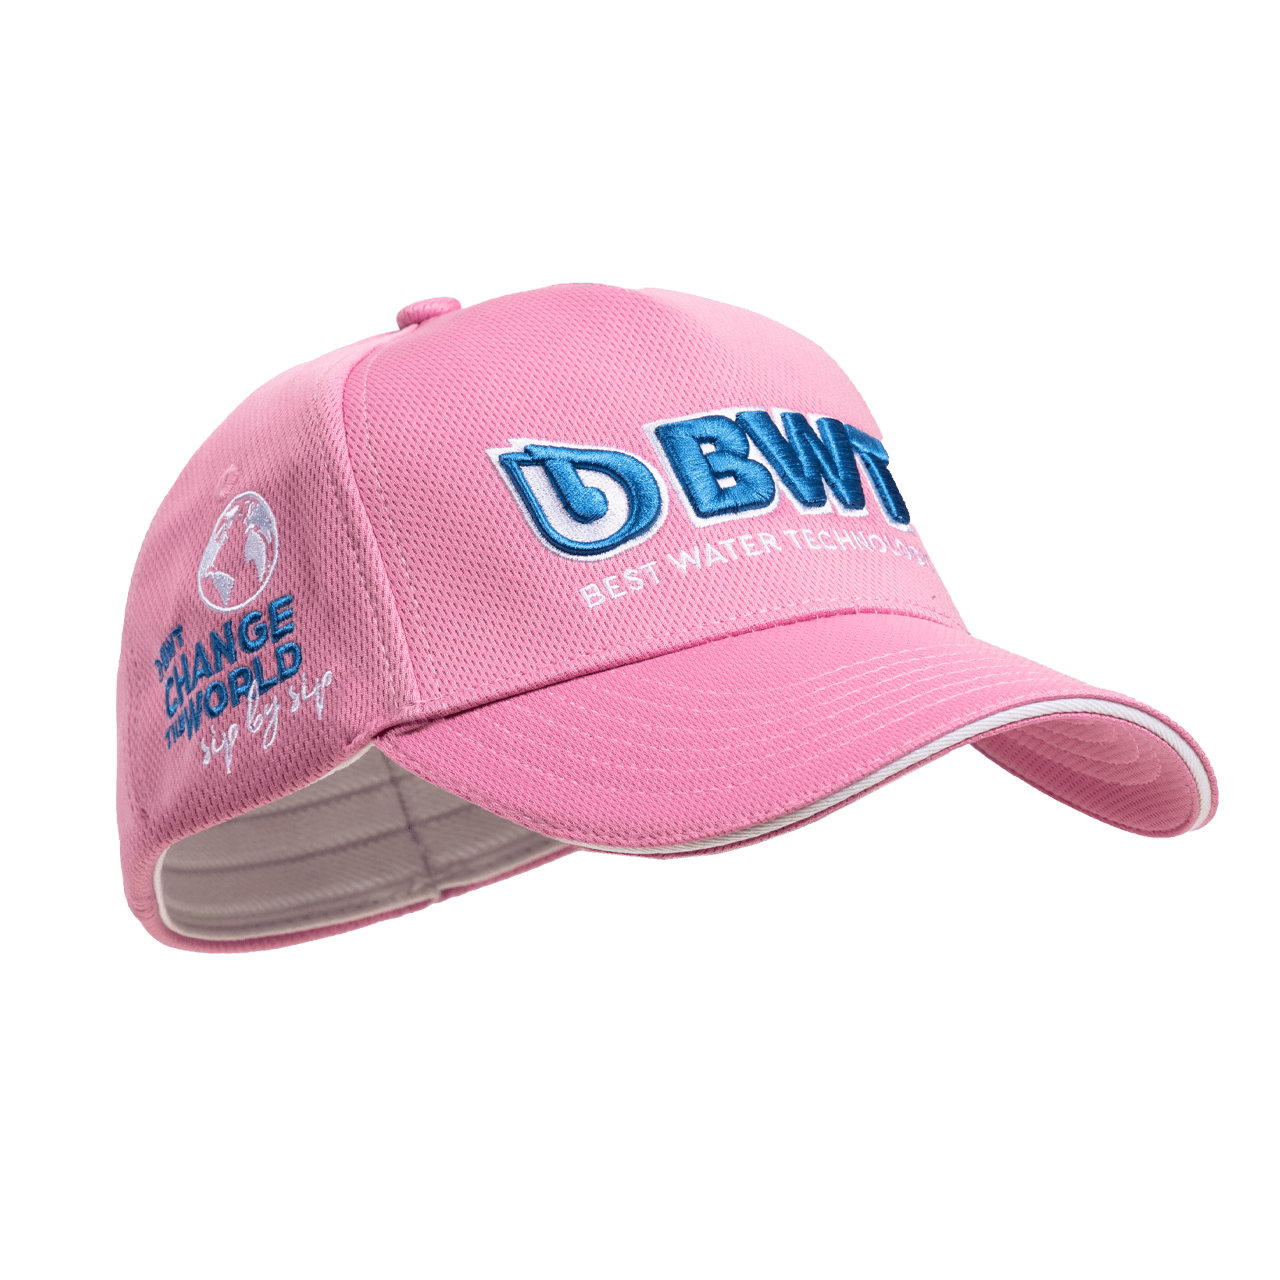 BWT Change the World Kappe in pink mit blauem BWT Logo